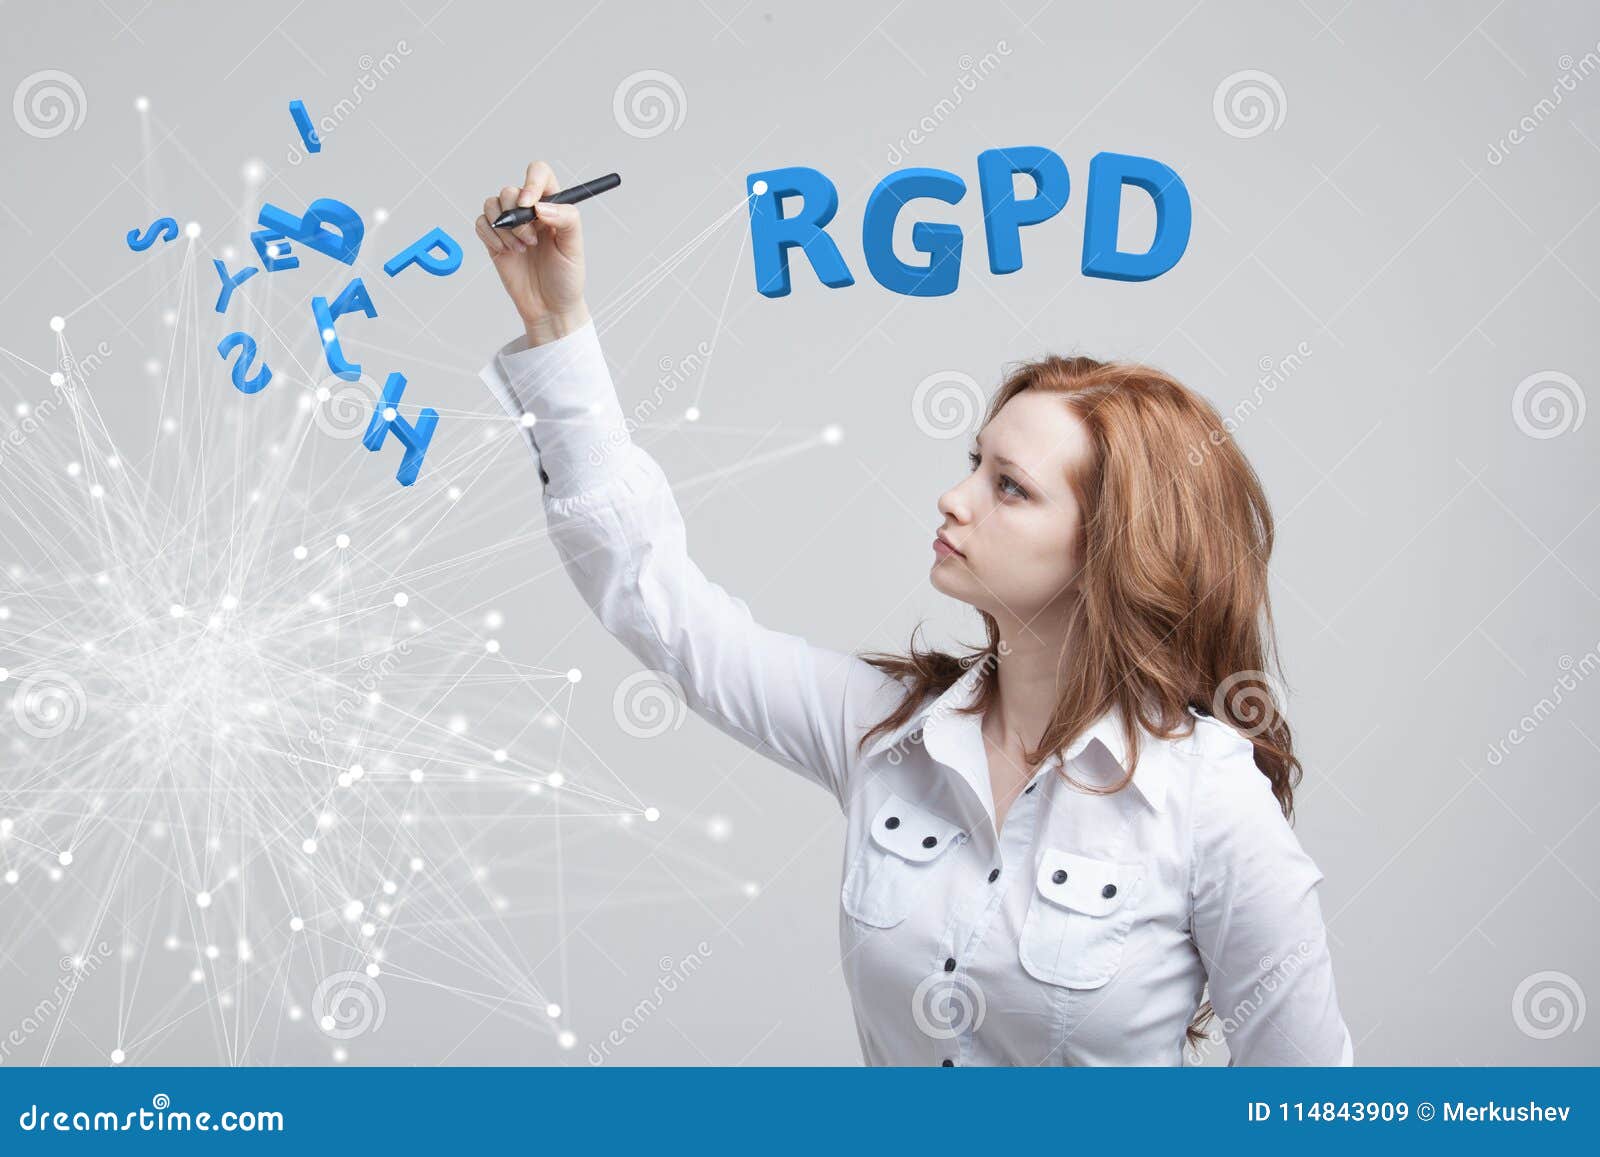 rgpd, spanish, french and italian version version of gdpr: reglamento general de proteccion de datos. general data